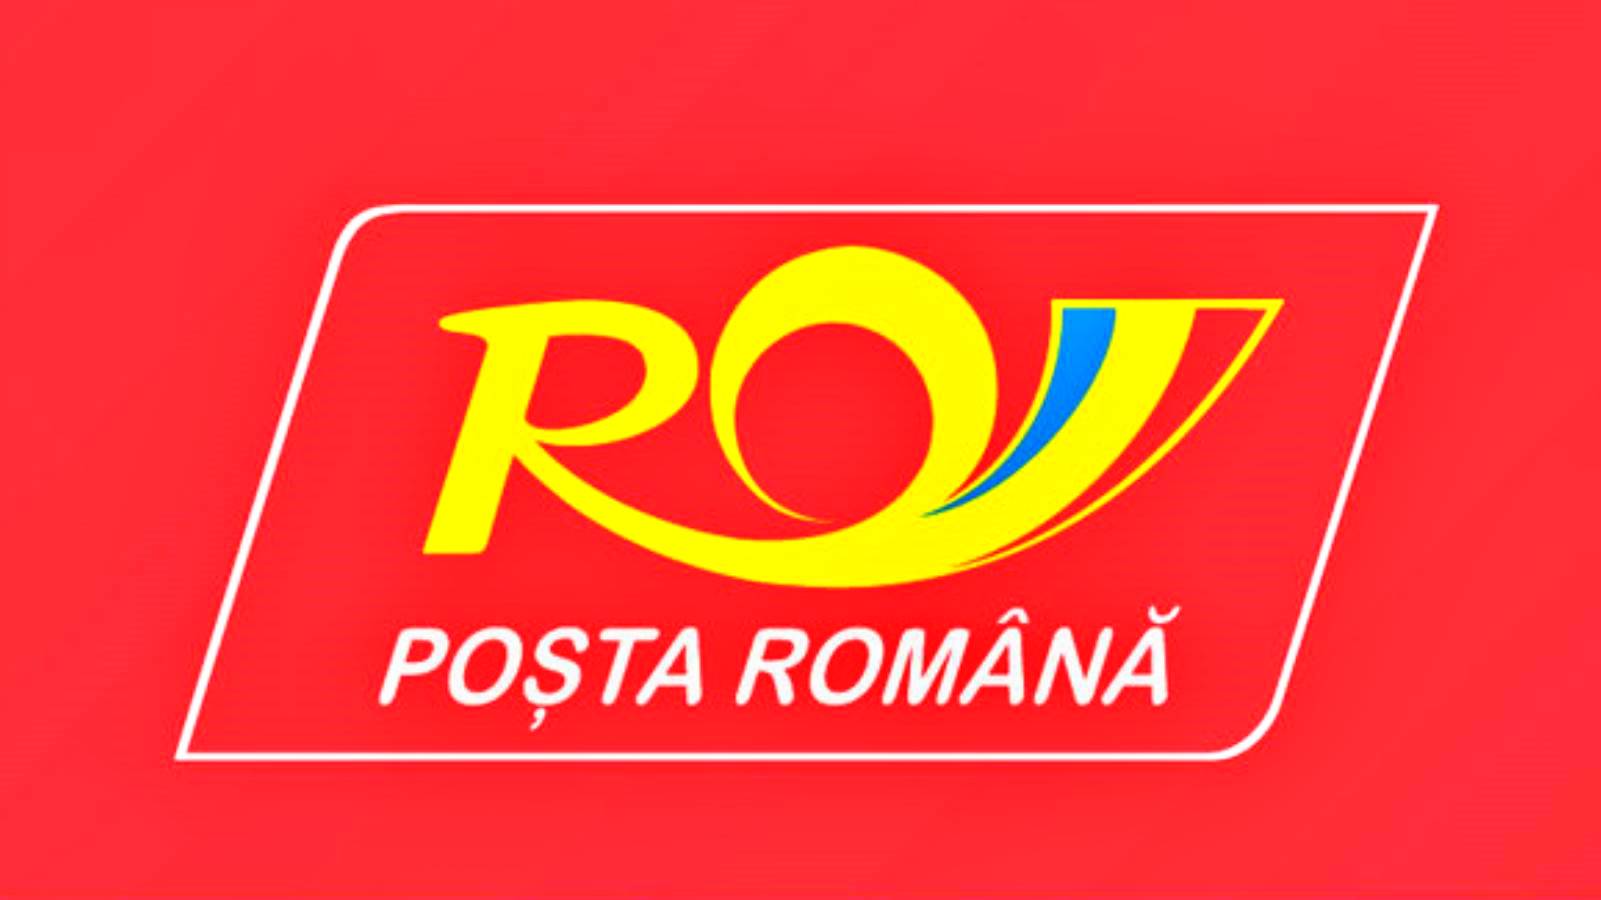 Romanian Post UltraPost service